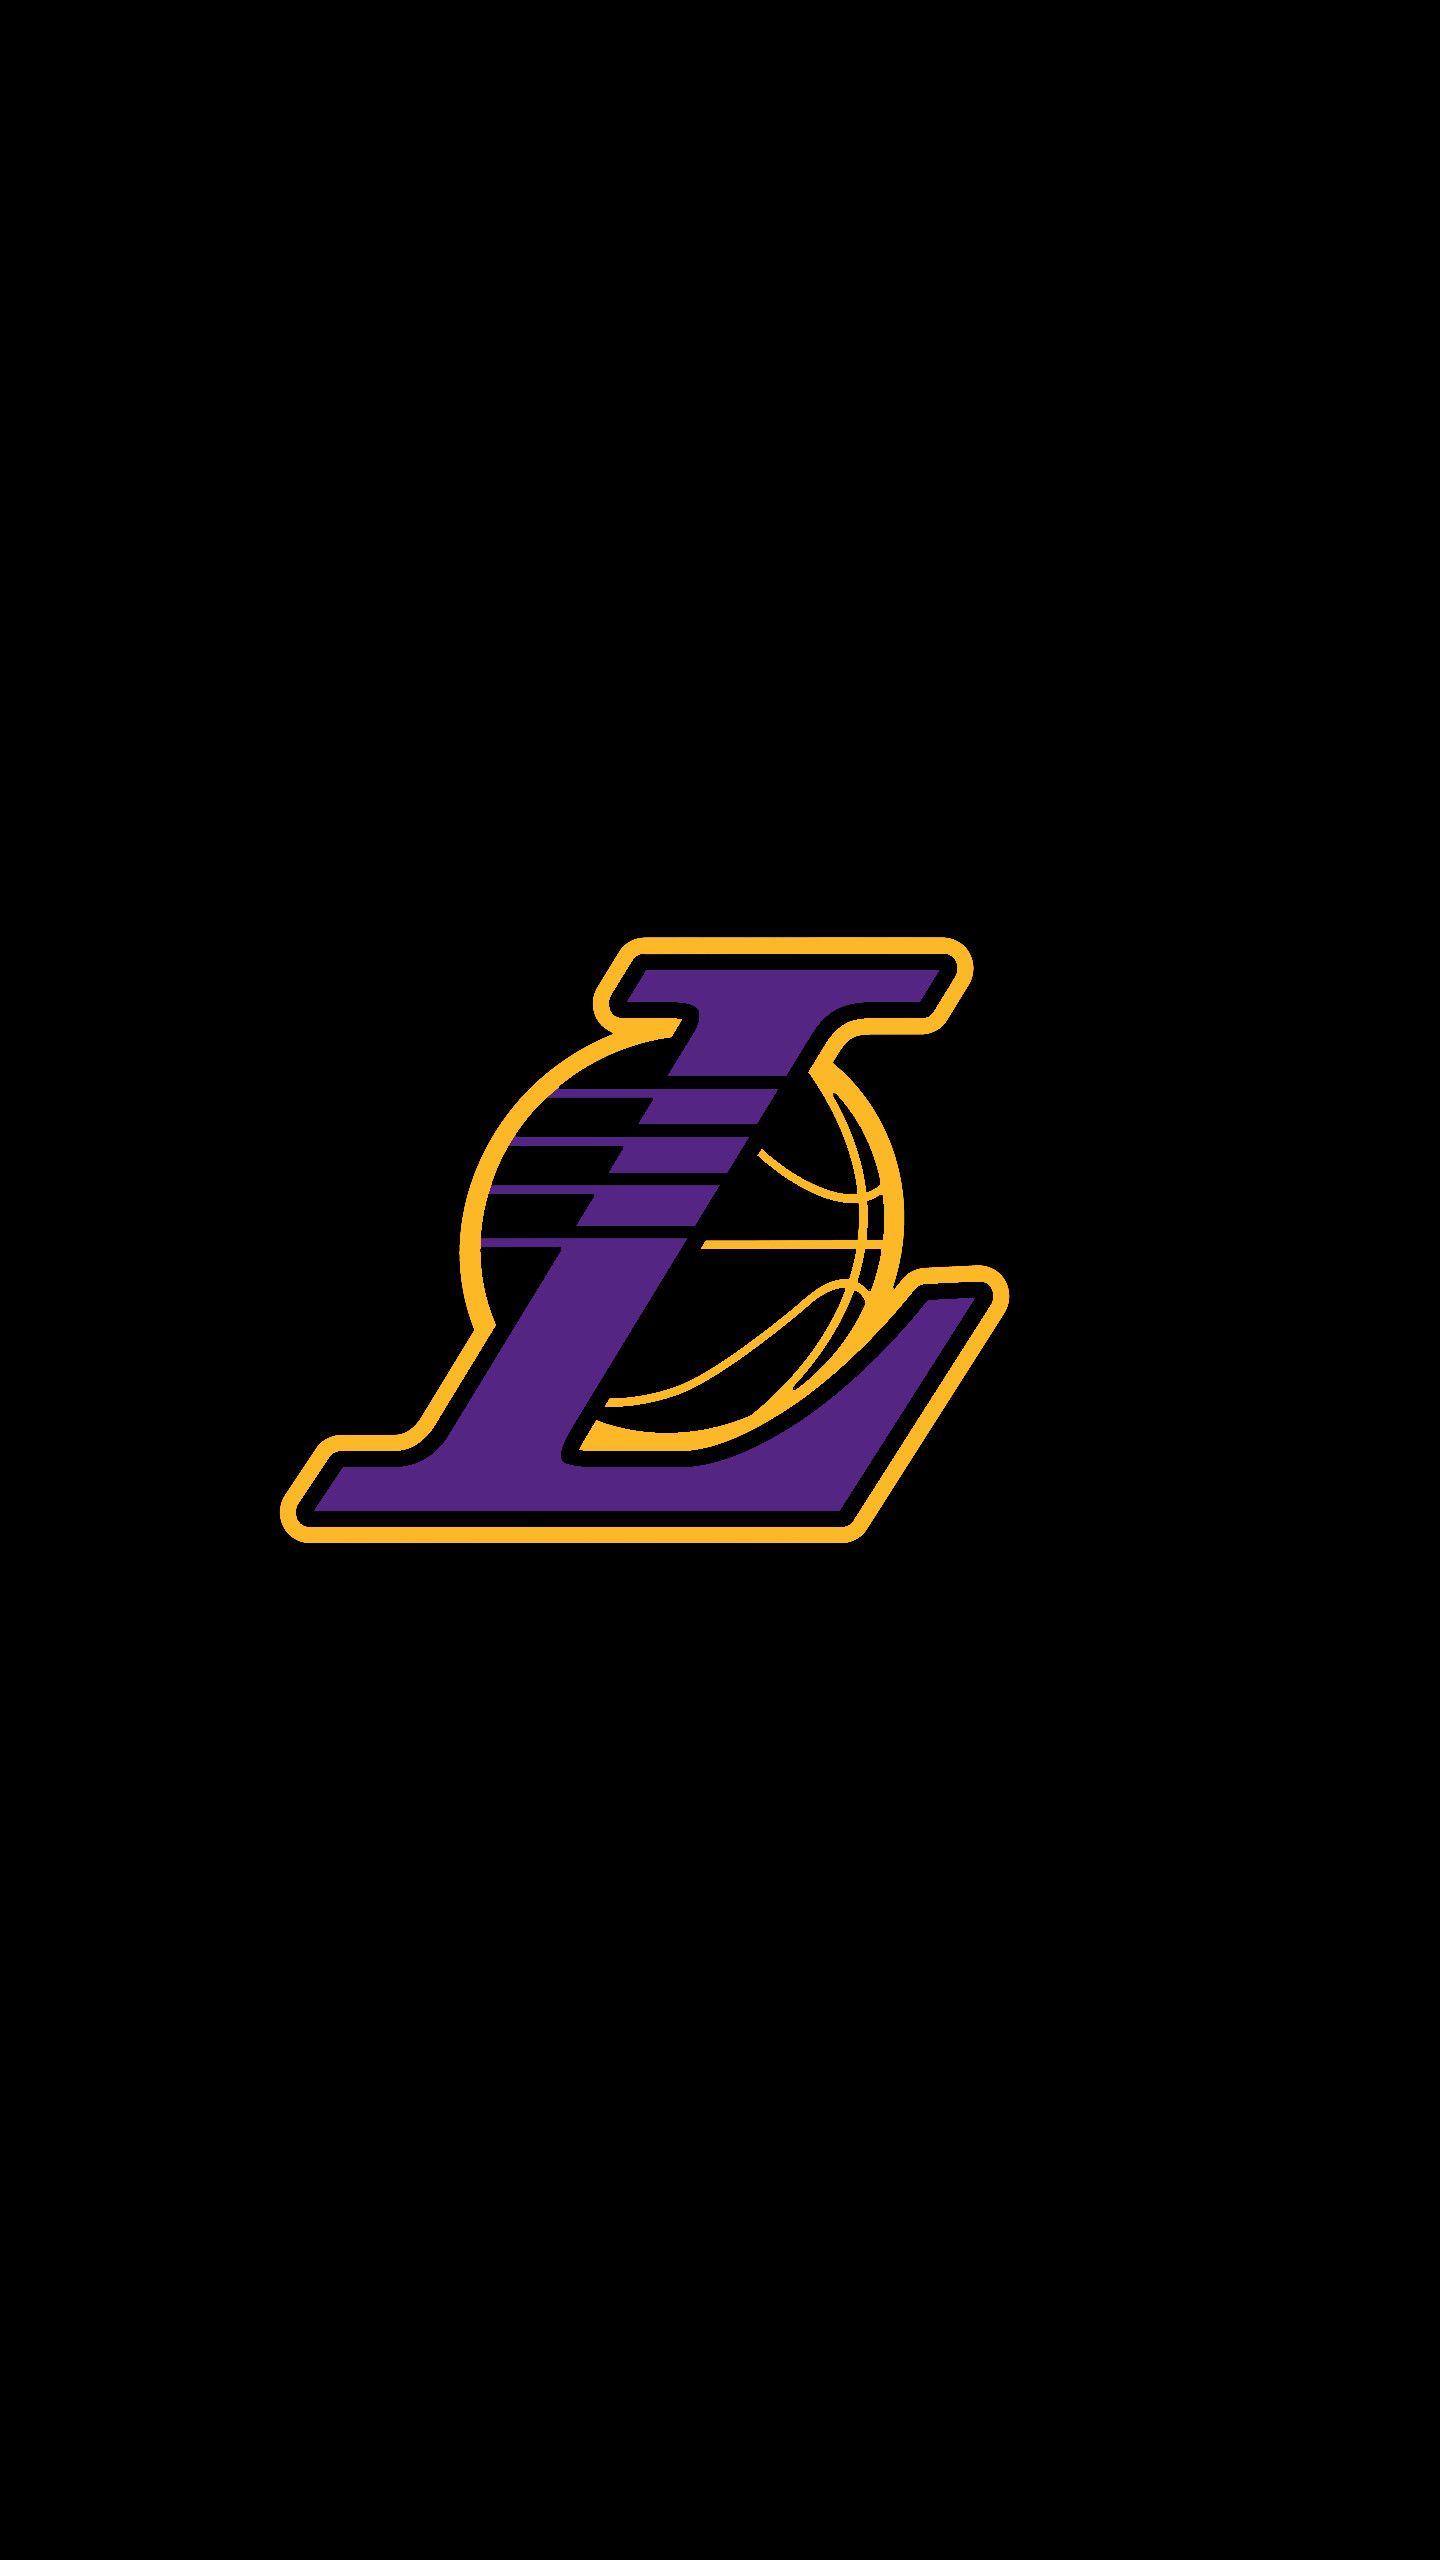 Lakers Logo Wallpaper. Lakers wallpaper, Lakers logo, Lebron james lakers